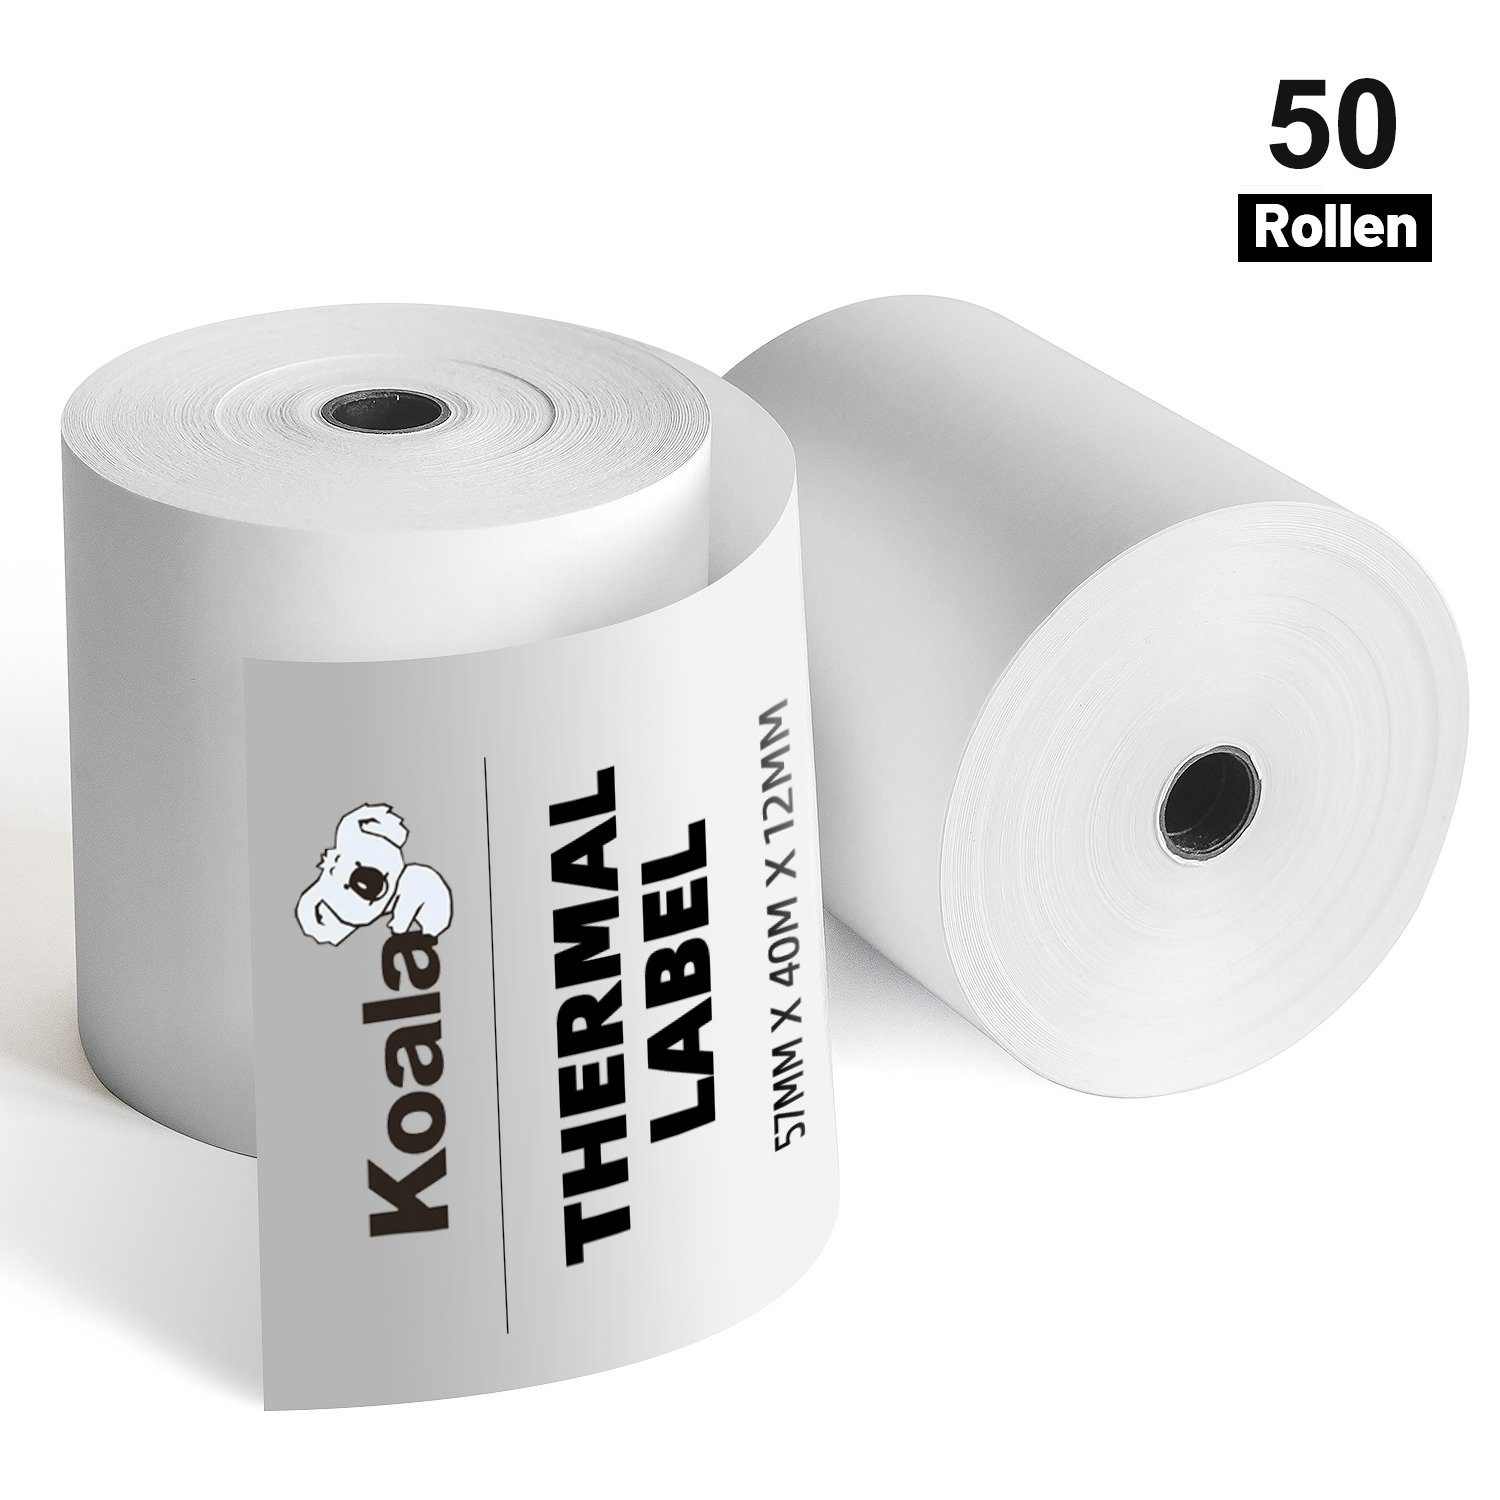 40 Rollen x mm Koala 57 Kassen, Thermopapier Etikettenpapier Drucker Bonrolle für 50